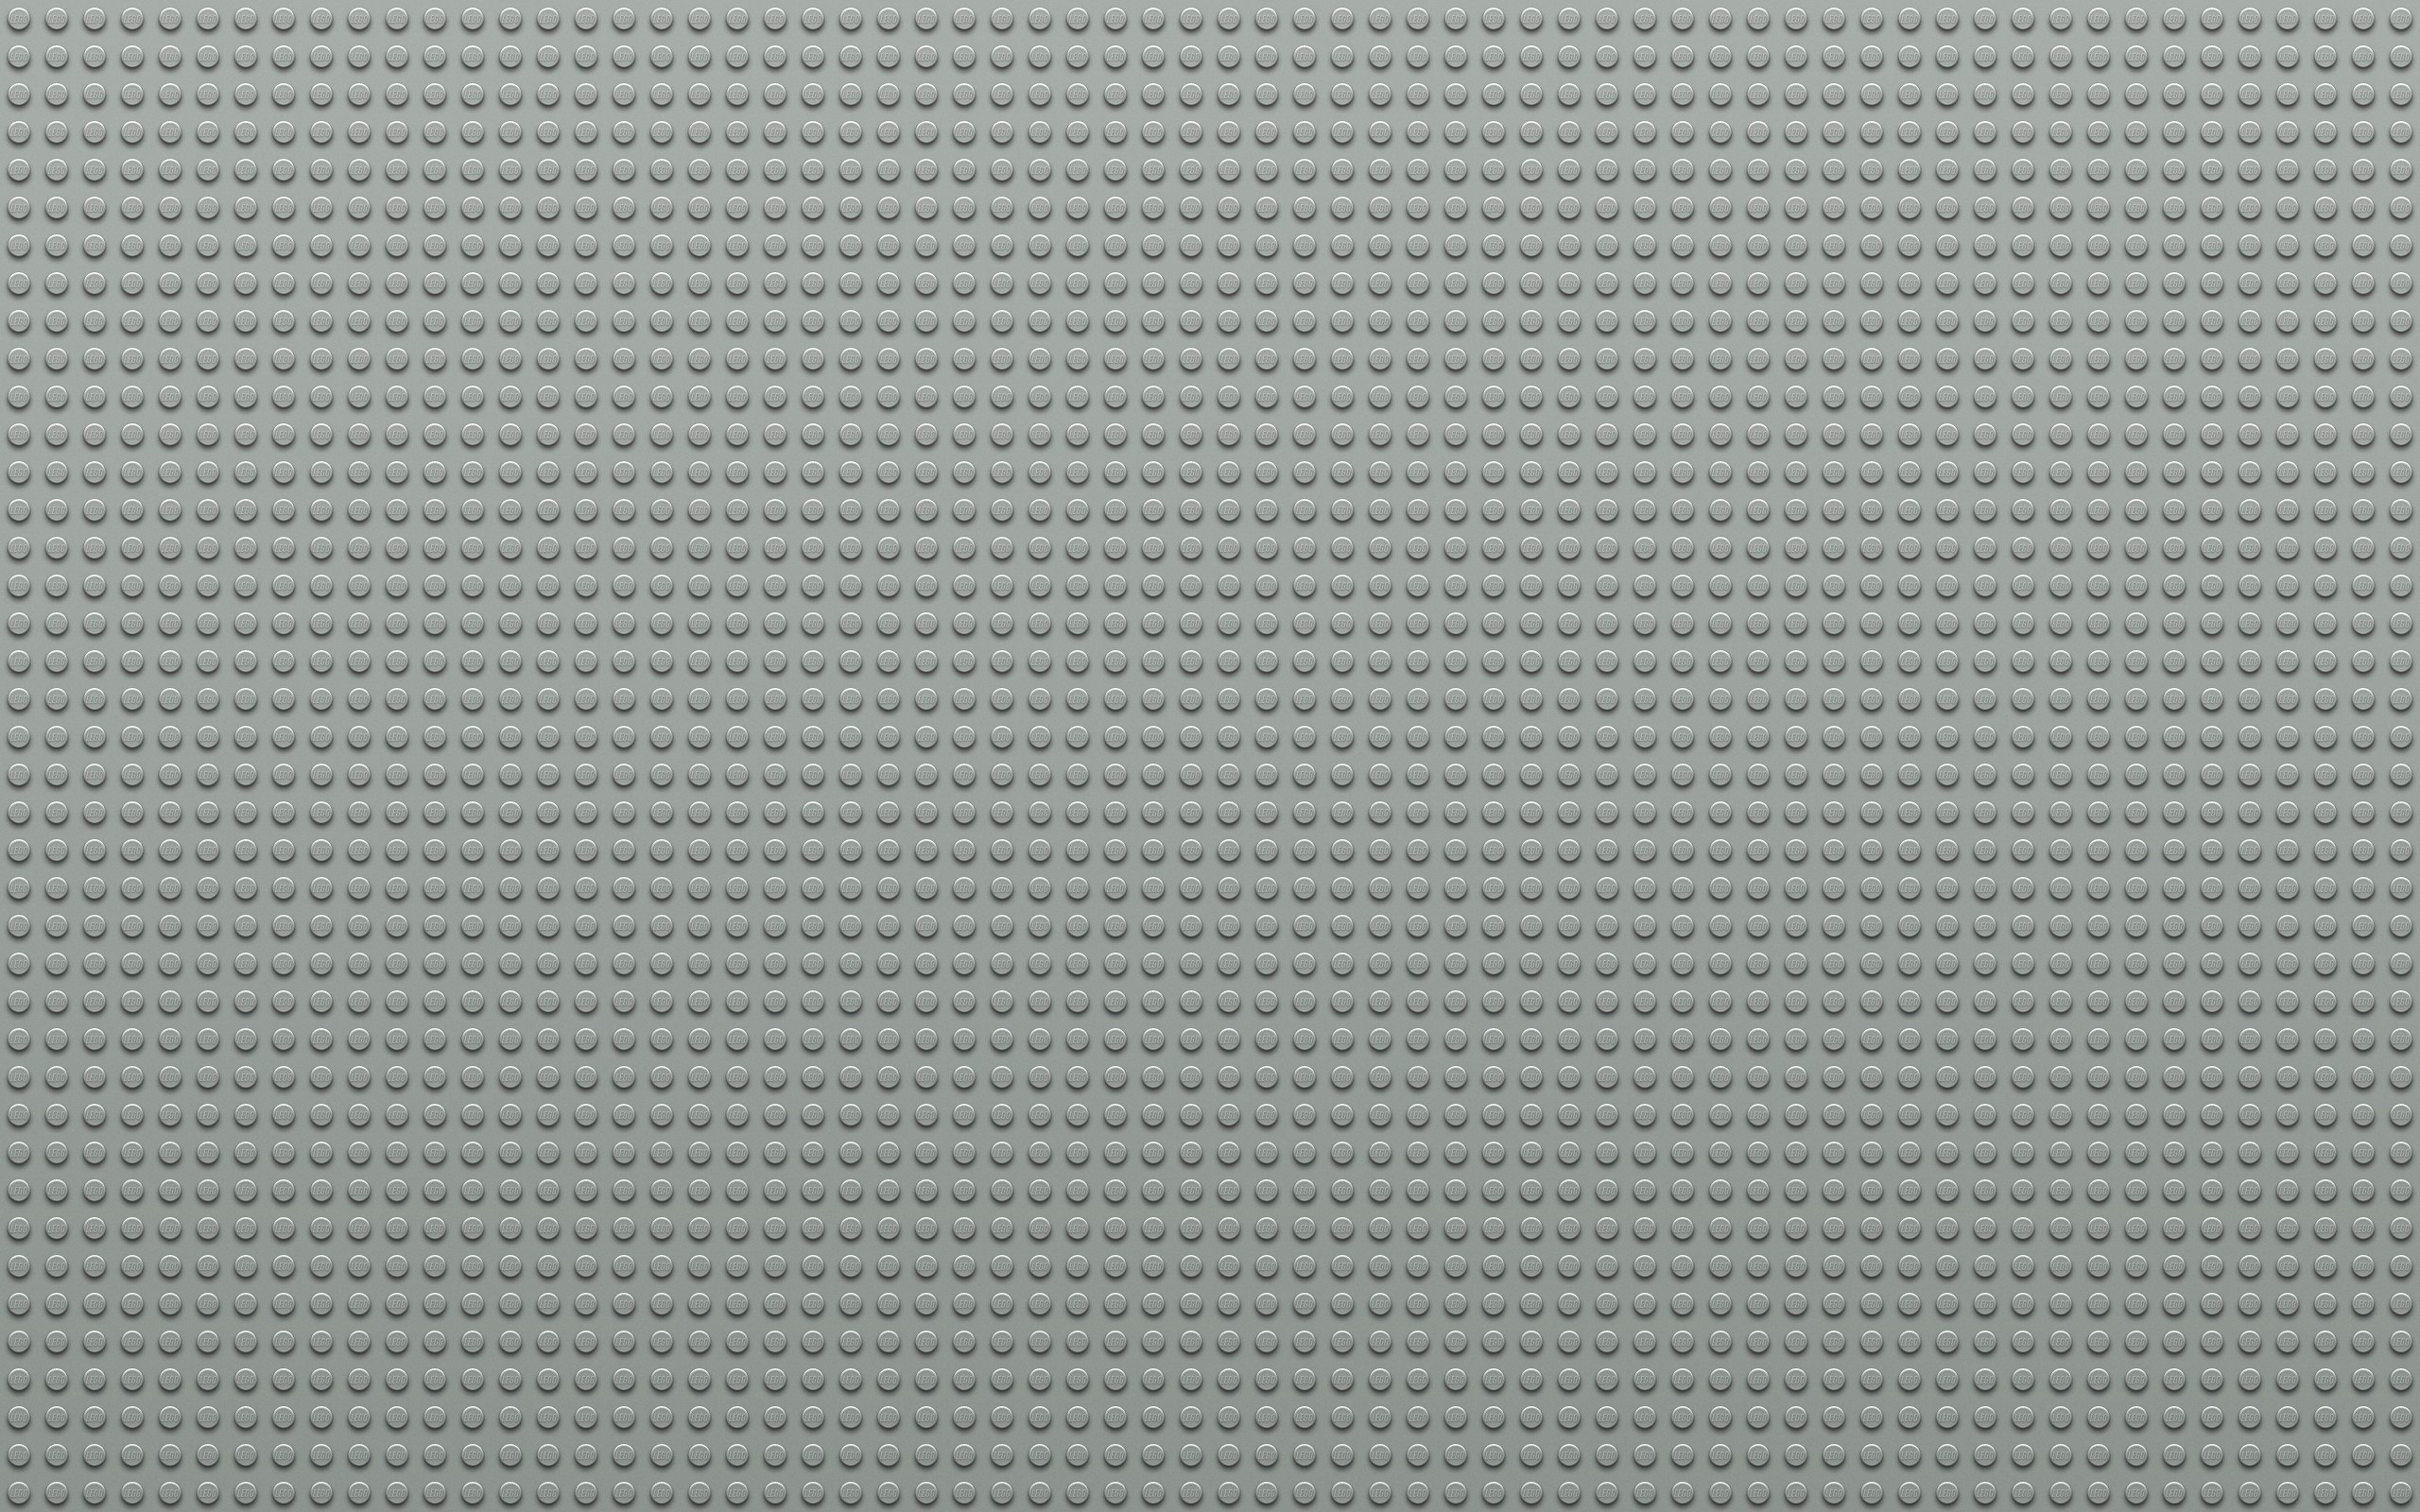 Wallpaper lego, points, circles, light gray